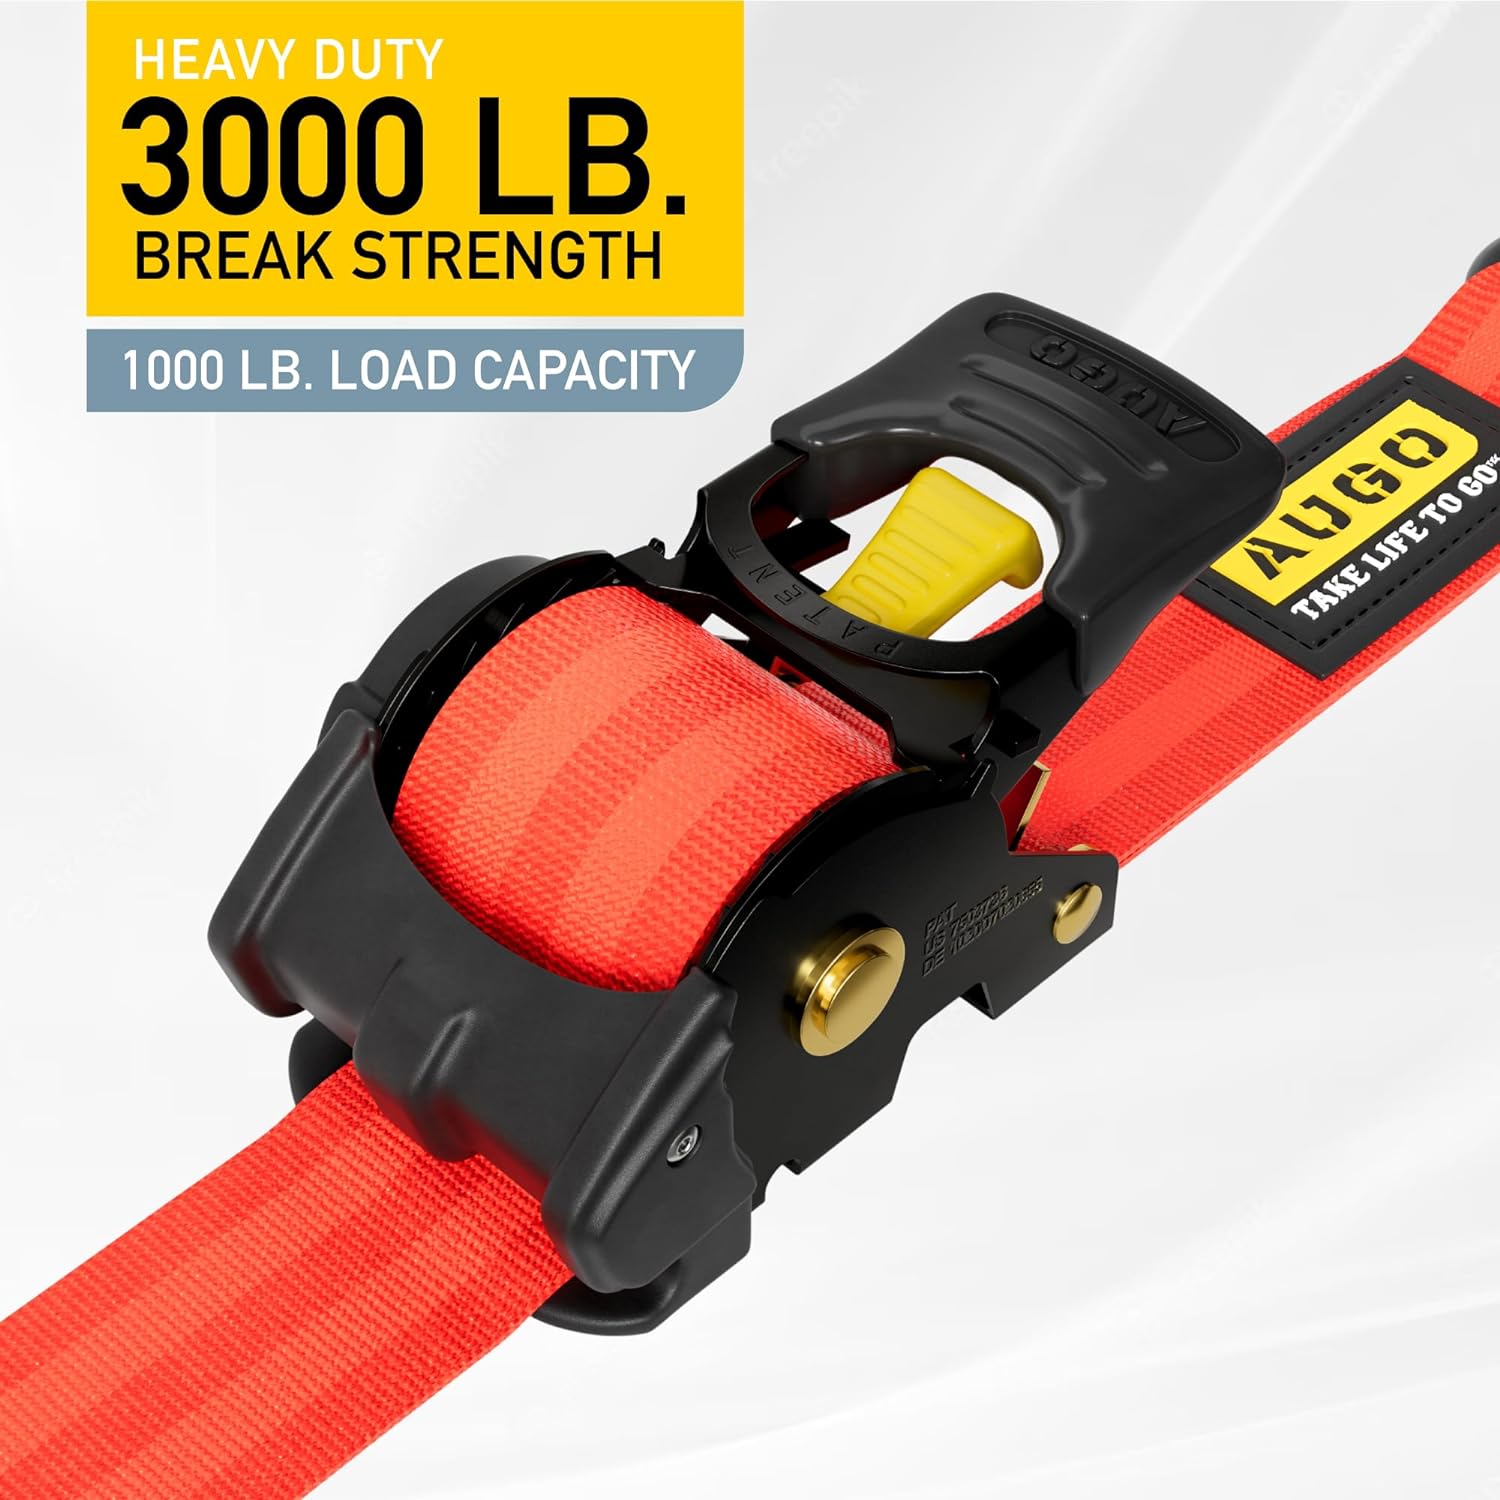 Heavy Duty Retractable Ratchet Straps - 2 Pack - 3000 lb Break Strength